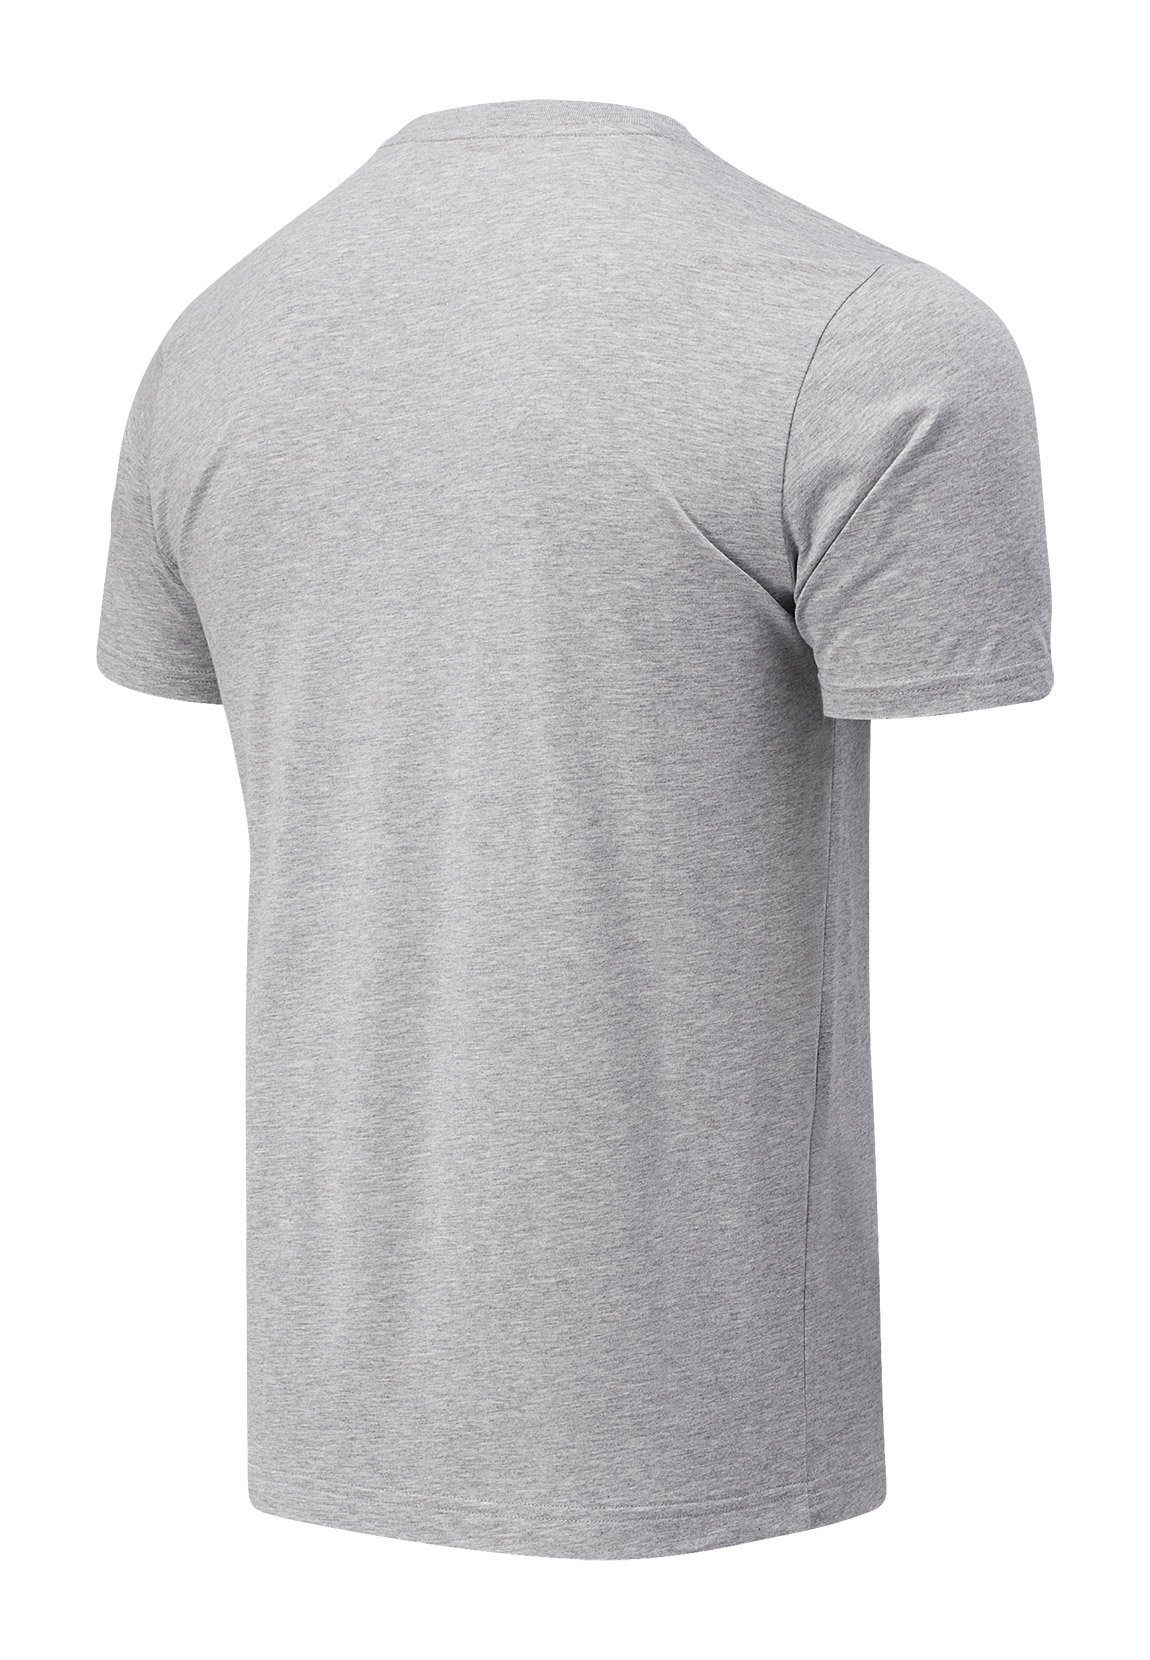 AG CLASSIC LOGO Gau Balance CORE New New Athletic T-Shirt Grey Balance ATHLGREY T-Shirt TEE MT03905